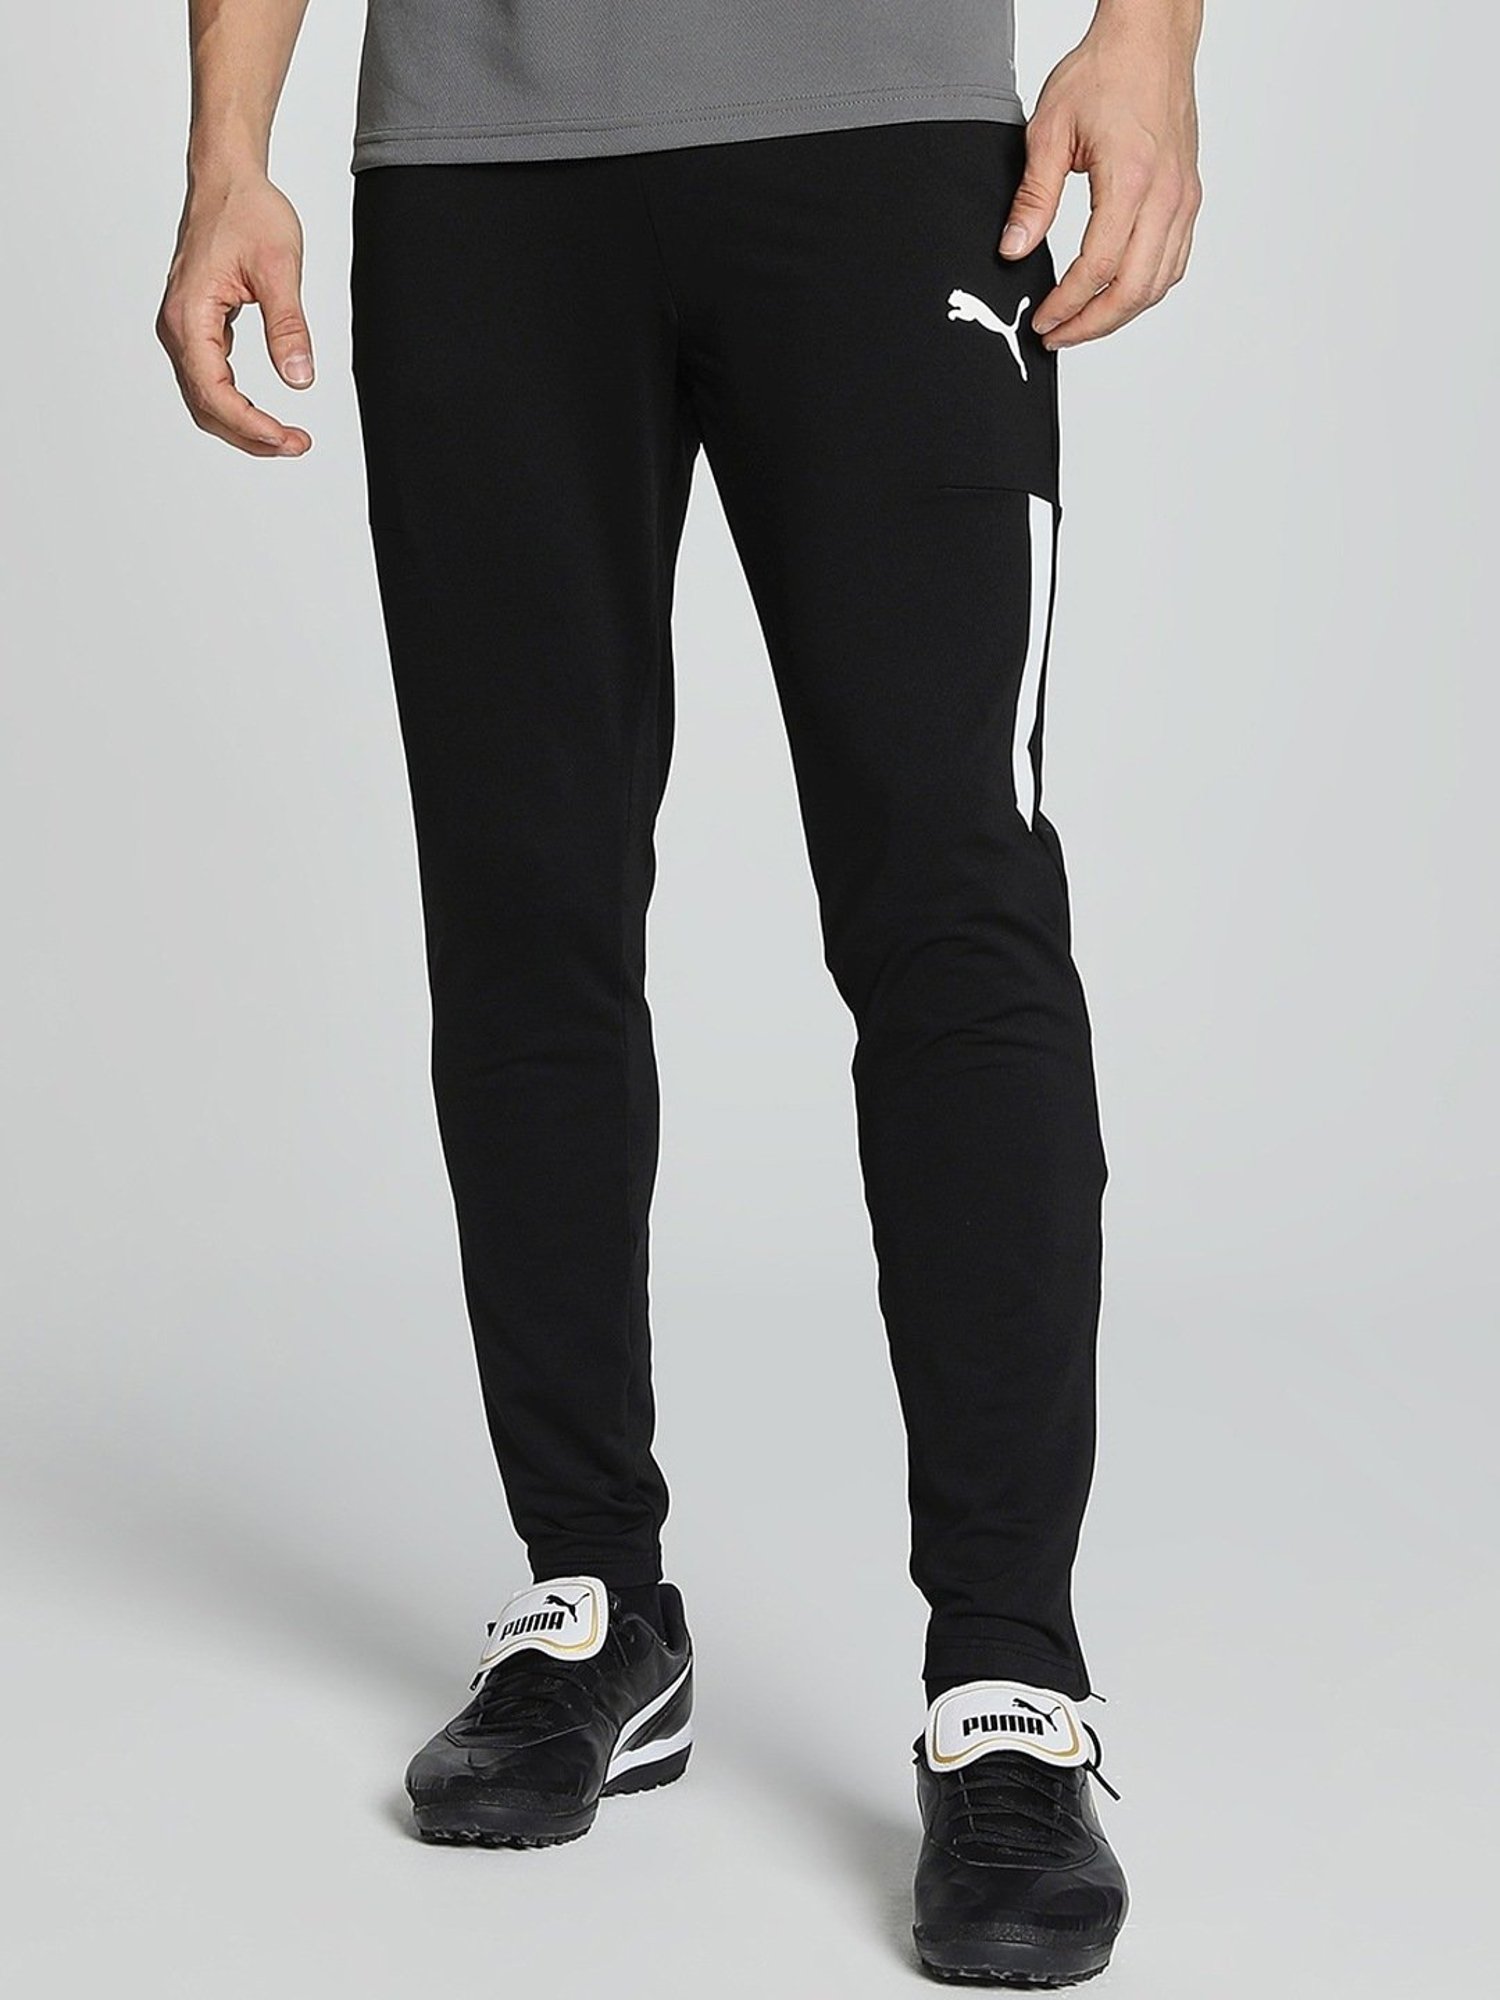 Puma Mens Speed Athletic Track Pants, Grey, Small | eBay